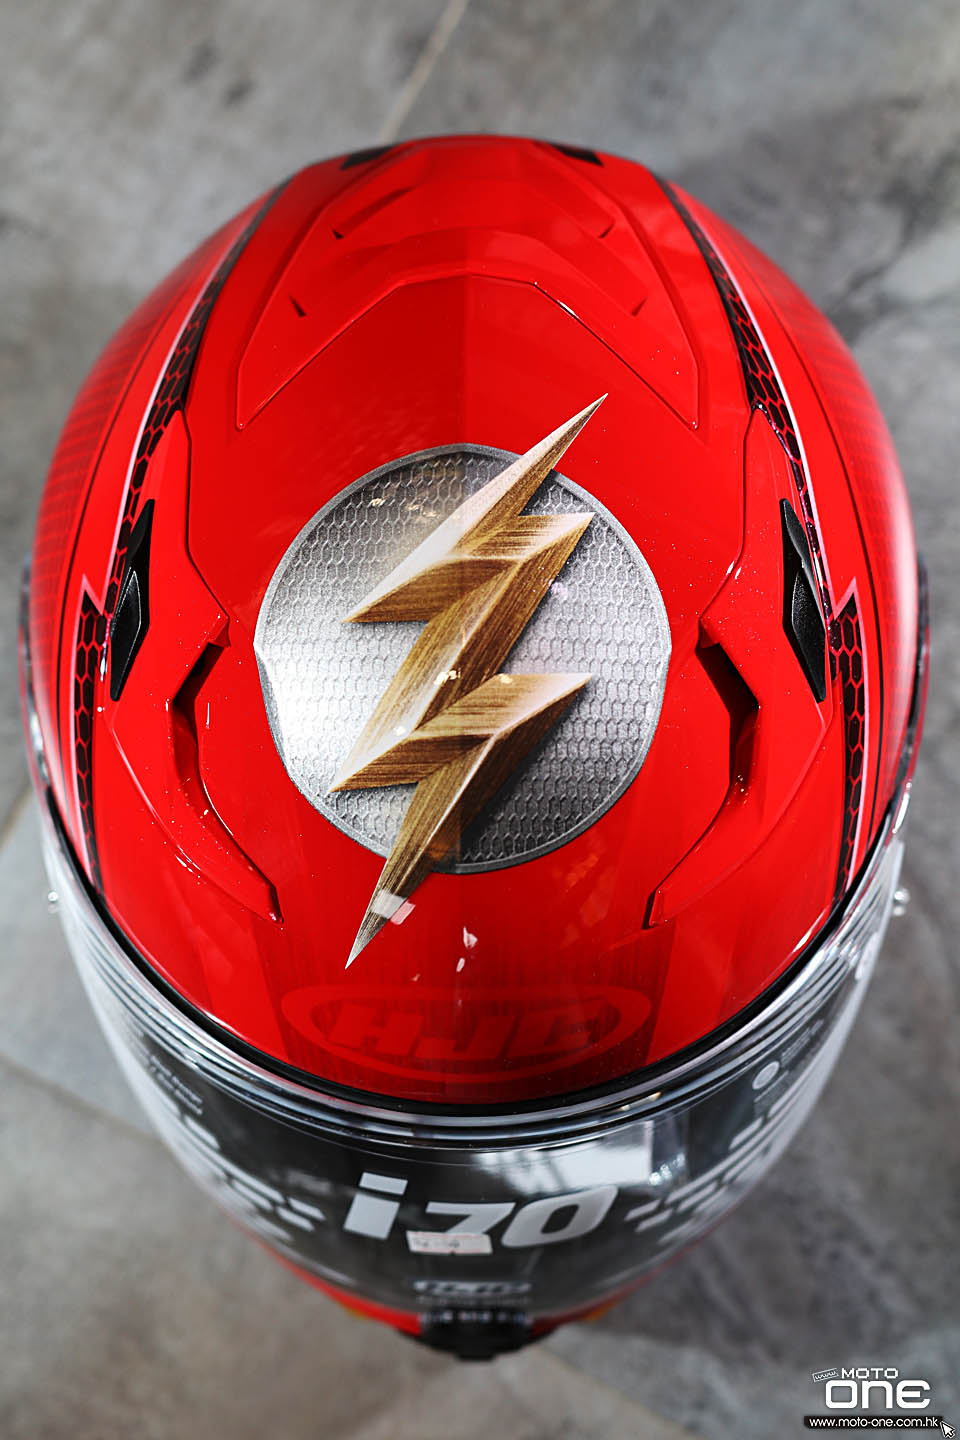 2019 HJC i70 The_Flash helmet